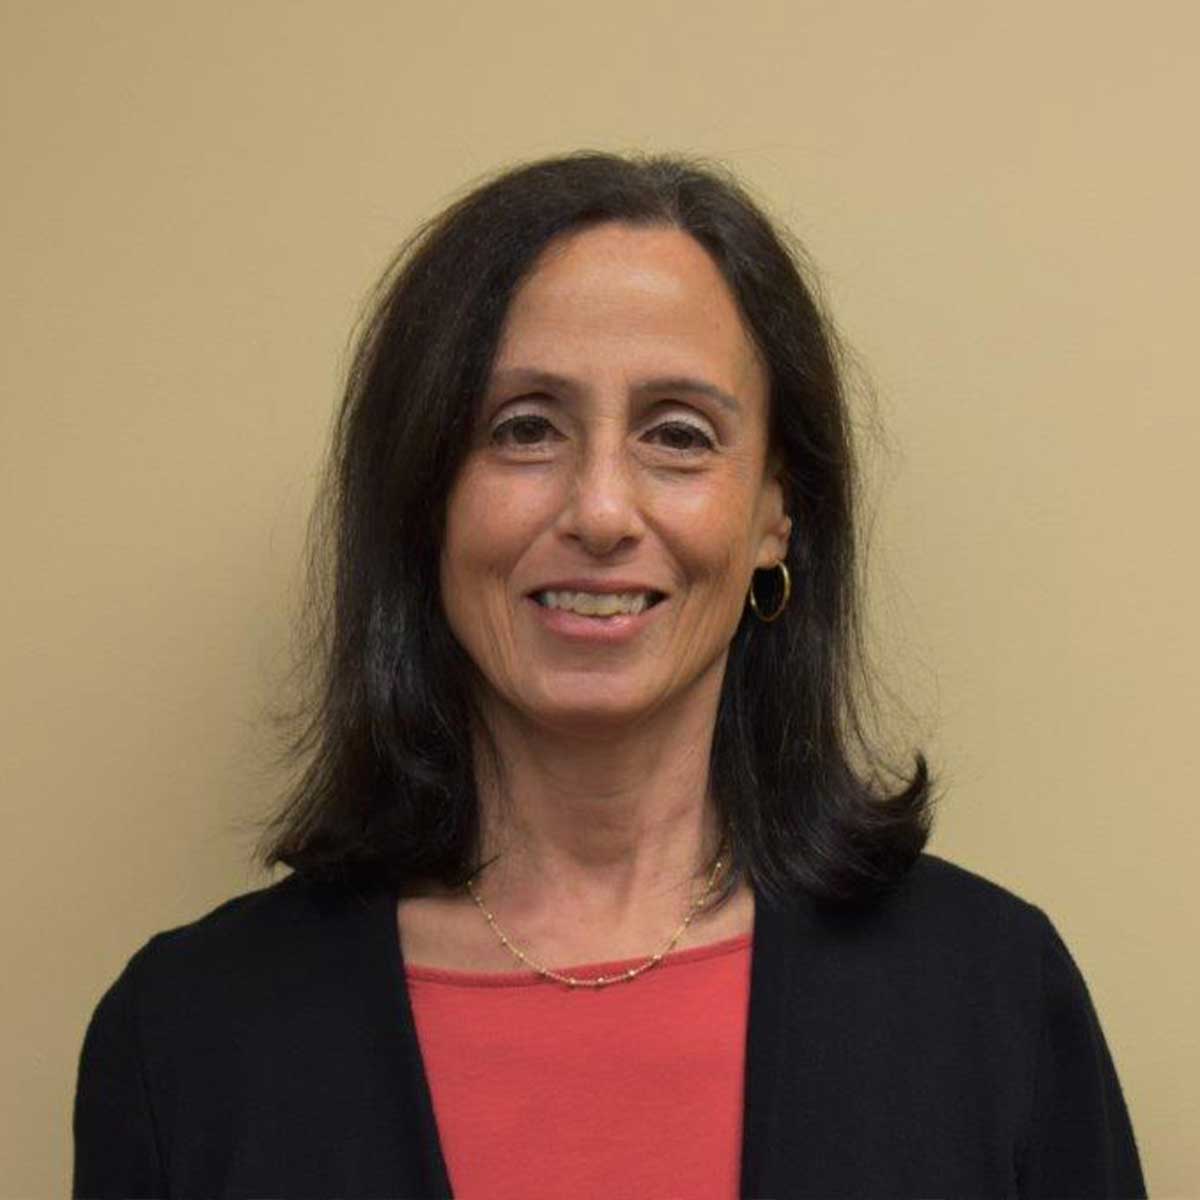 Deborah Schutzbank Photo - Top Rated Insurance Administrator In Mamaroneck, NY